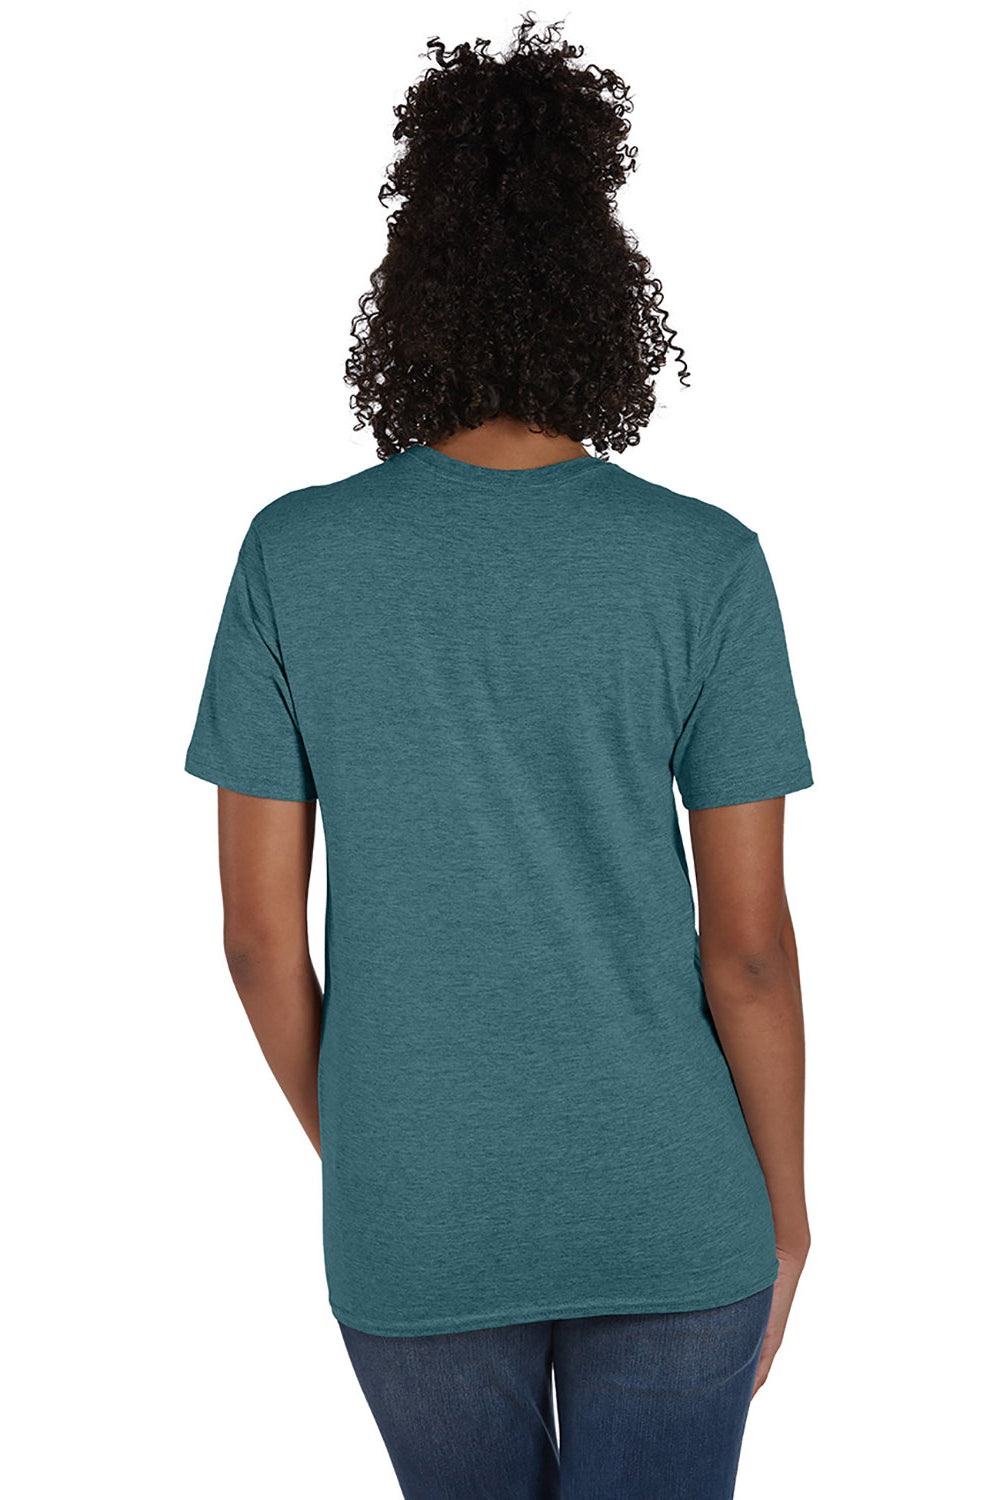 Hanes 4980 Mens Nano-T Short Sleeve Crewneck T-Shirt Heather Cactus Green Back